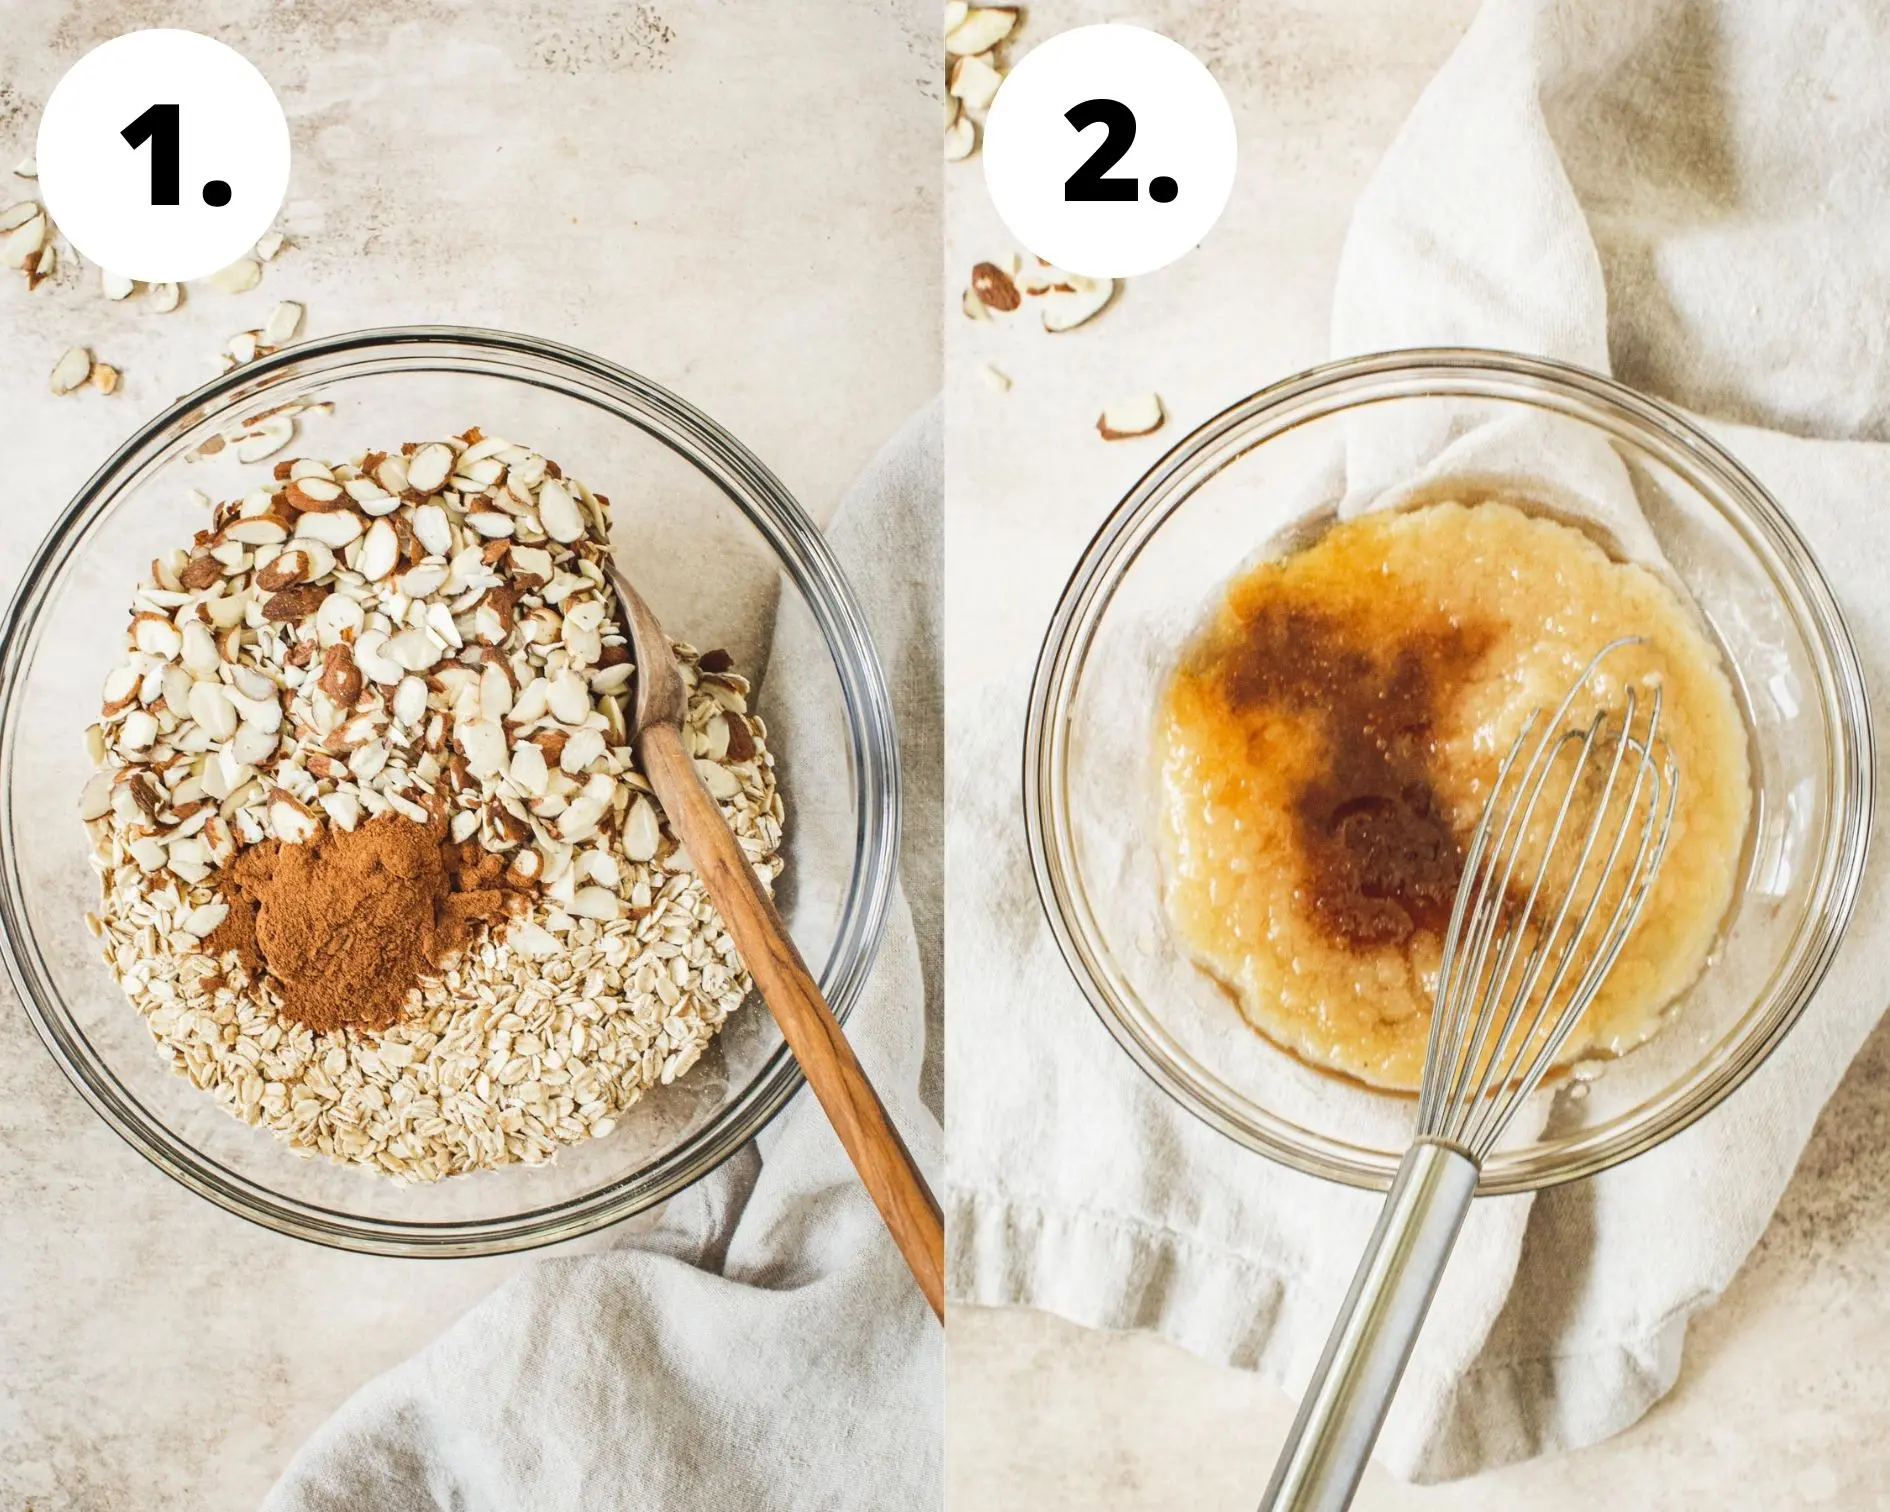 Process steps 1 and 2 for making honey vanilla granola.